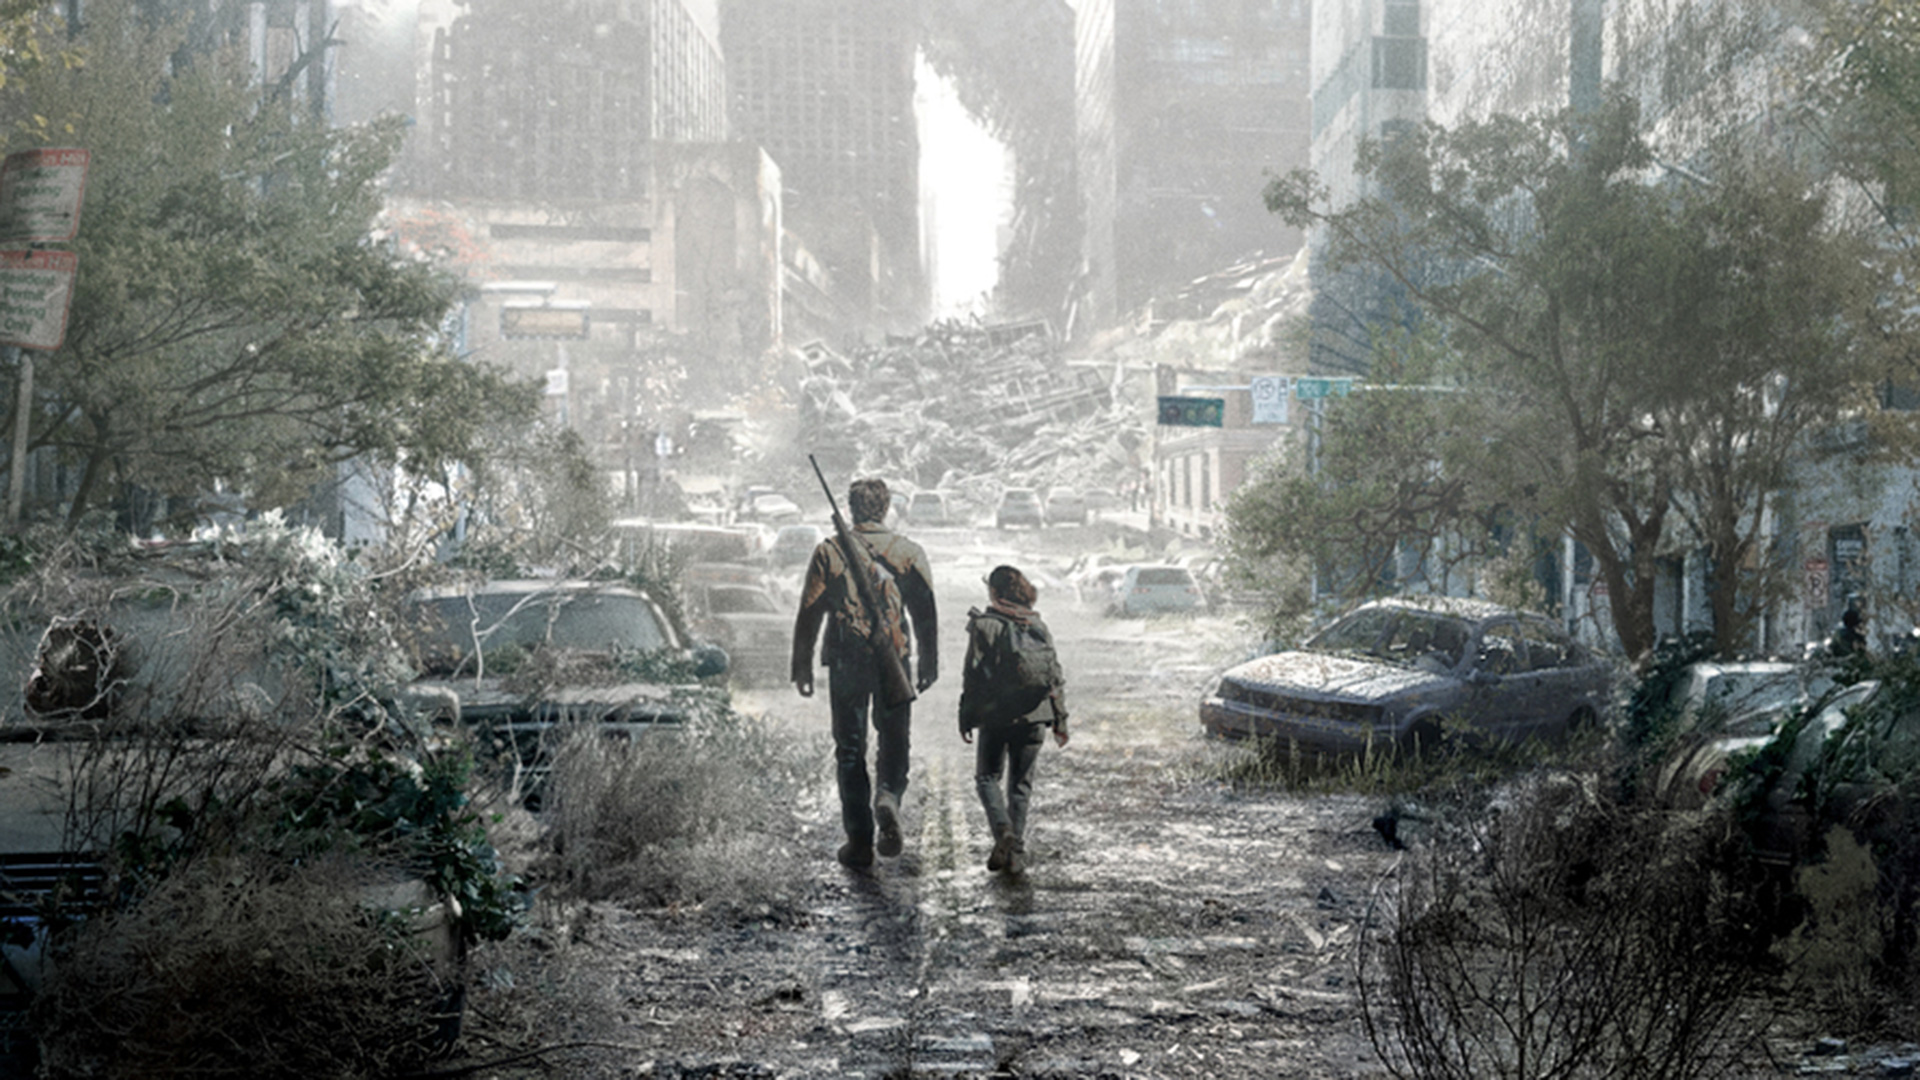 The Last of Us Wallpaper 4K, HBO series